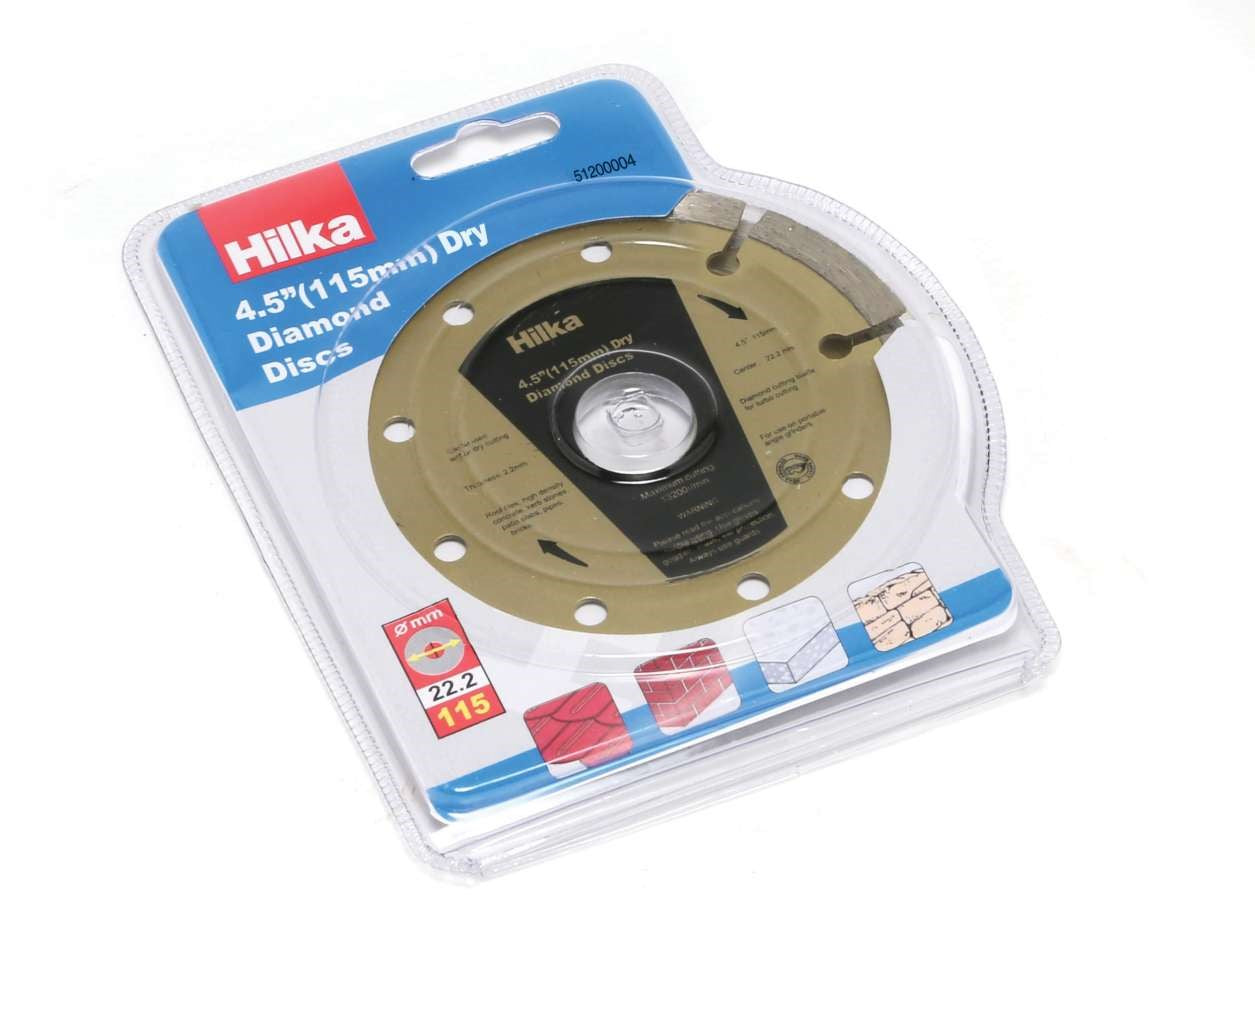 Hilka Diamond Cutting Disc Pro Craft 4.5" (115mm)